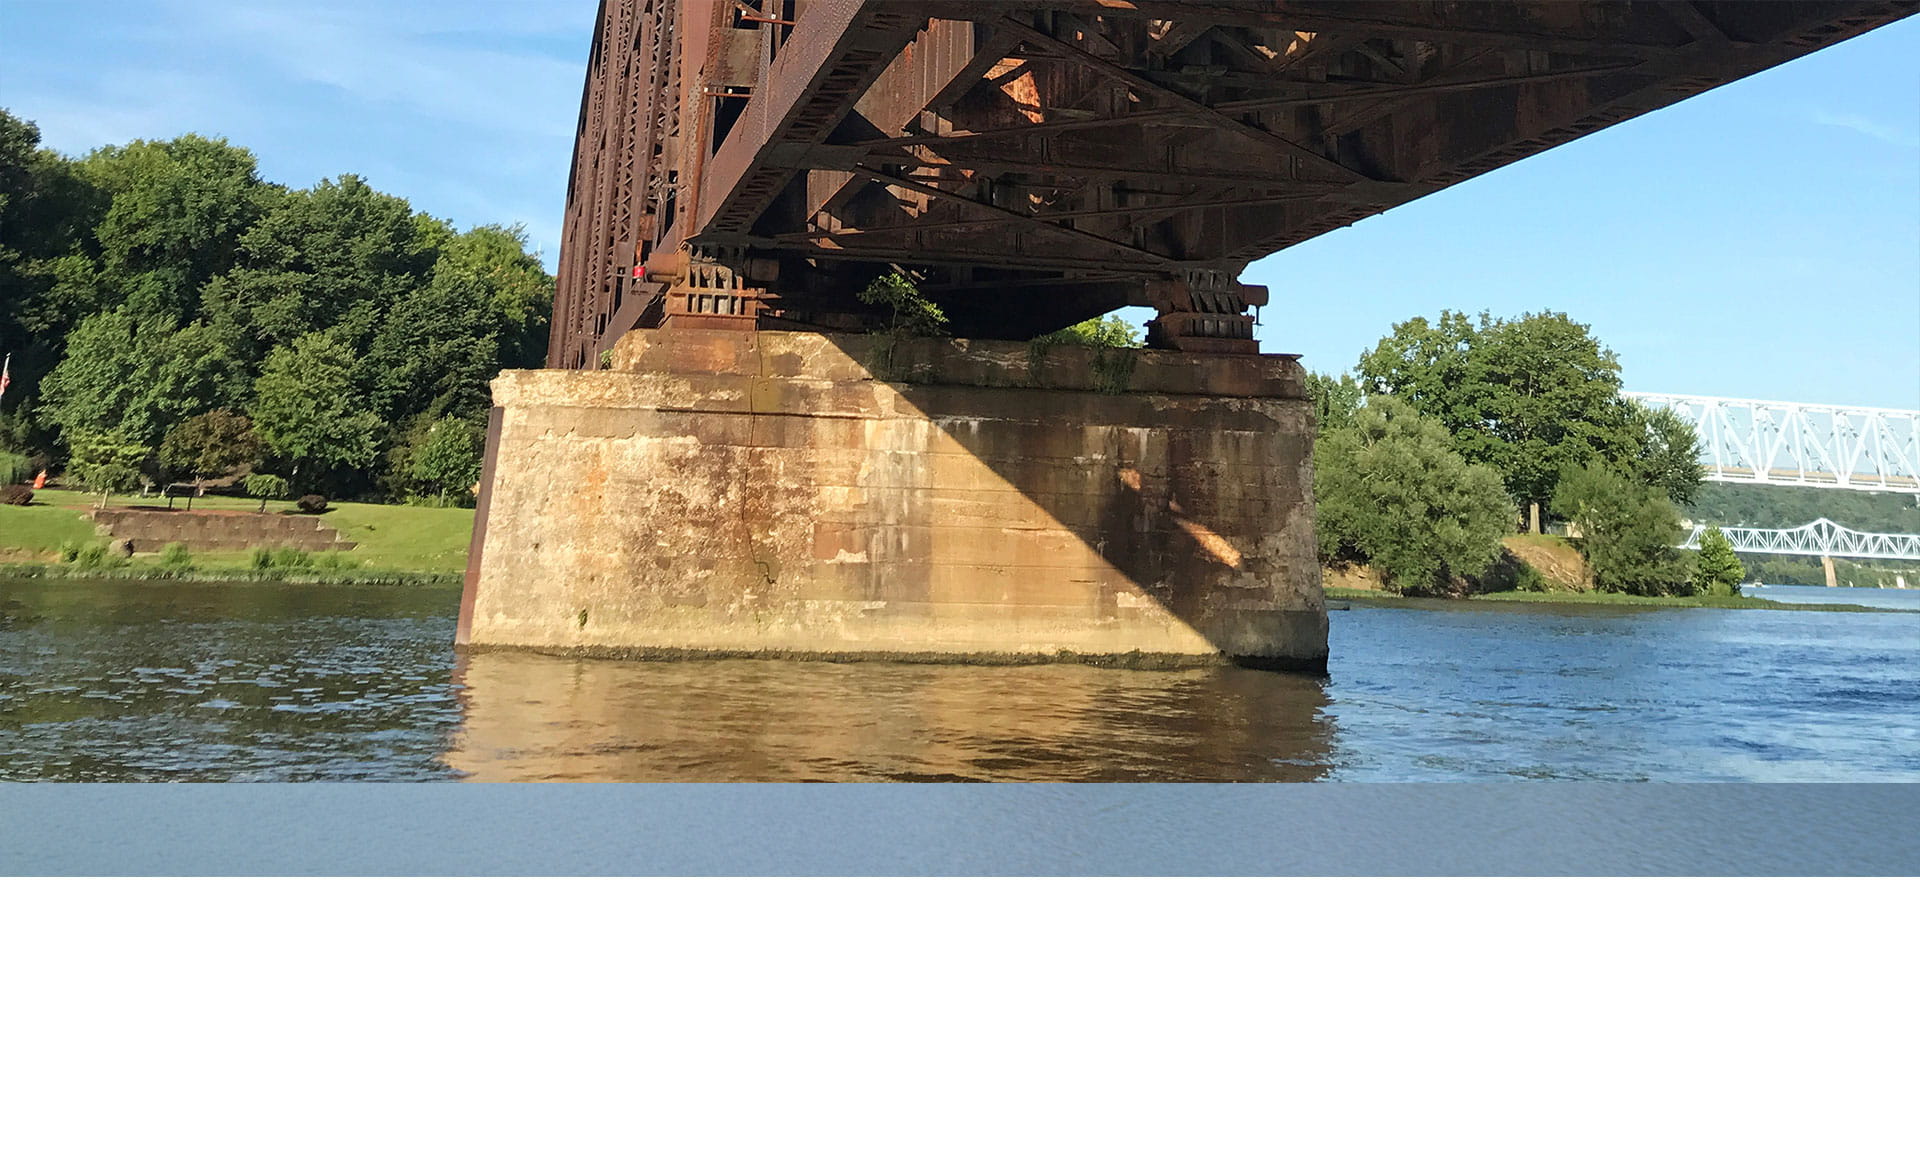 Below a rusty train bridge